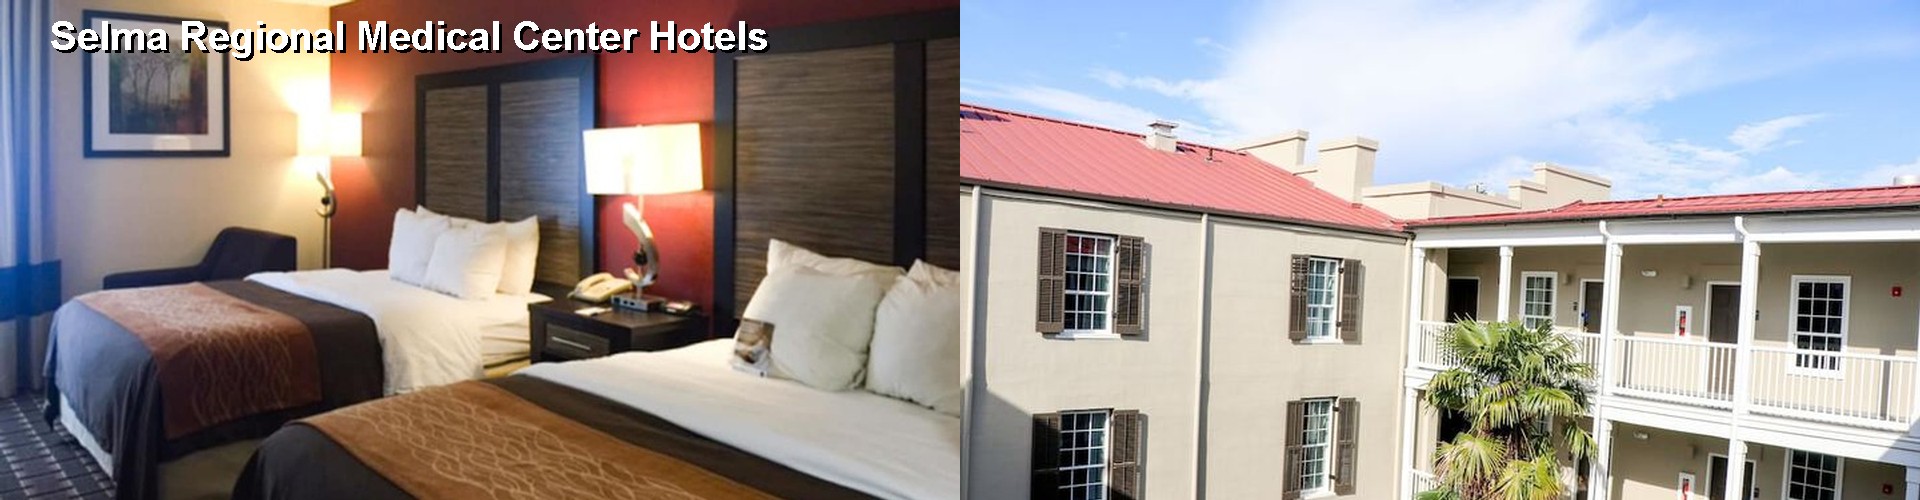 3 Best Hotels near Selma Regional Medical Center